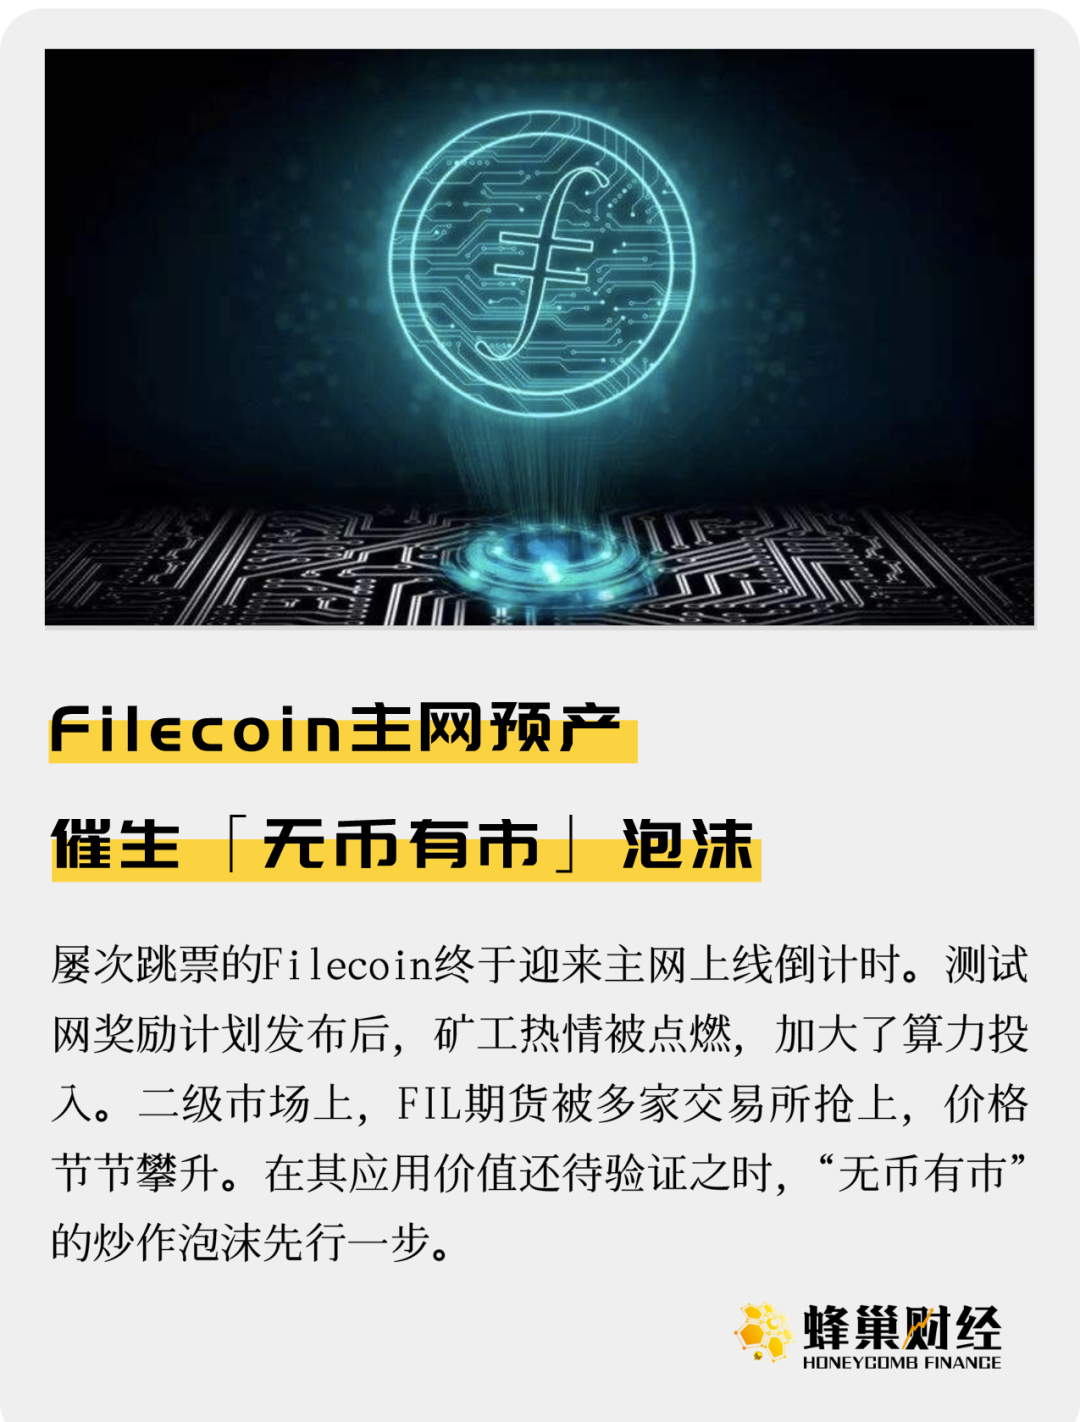 Filecoin主网预产 催生「无币有市」泡沫